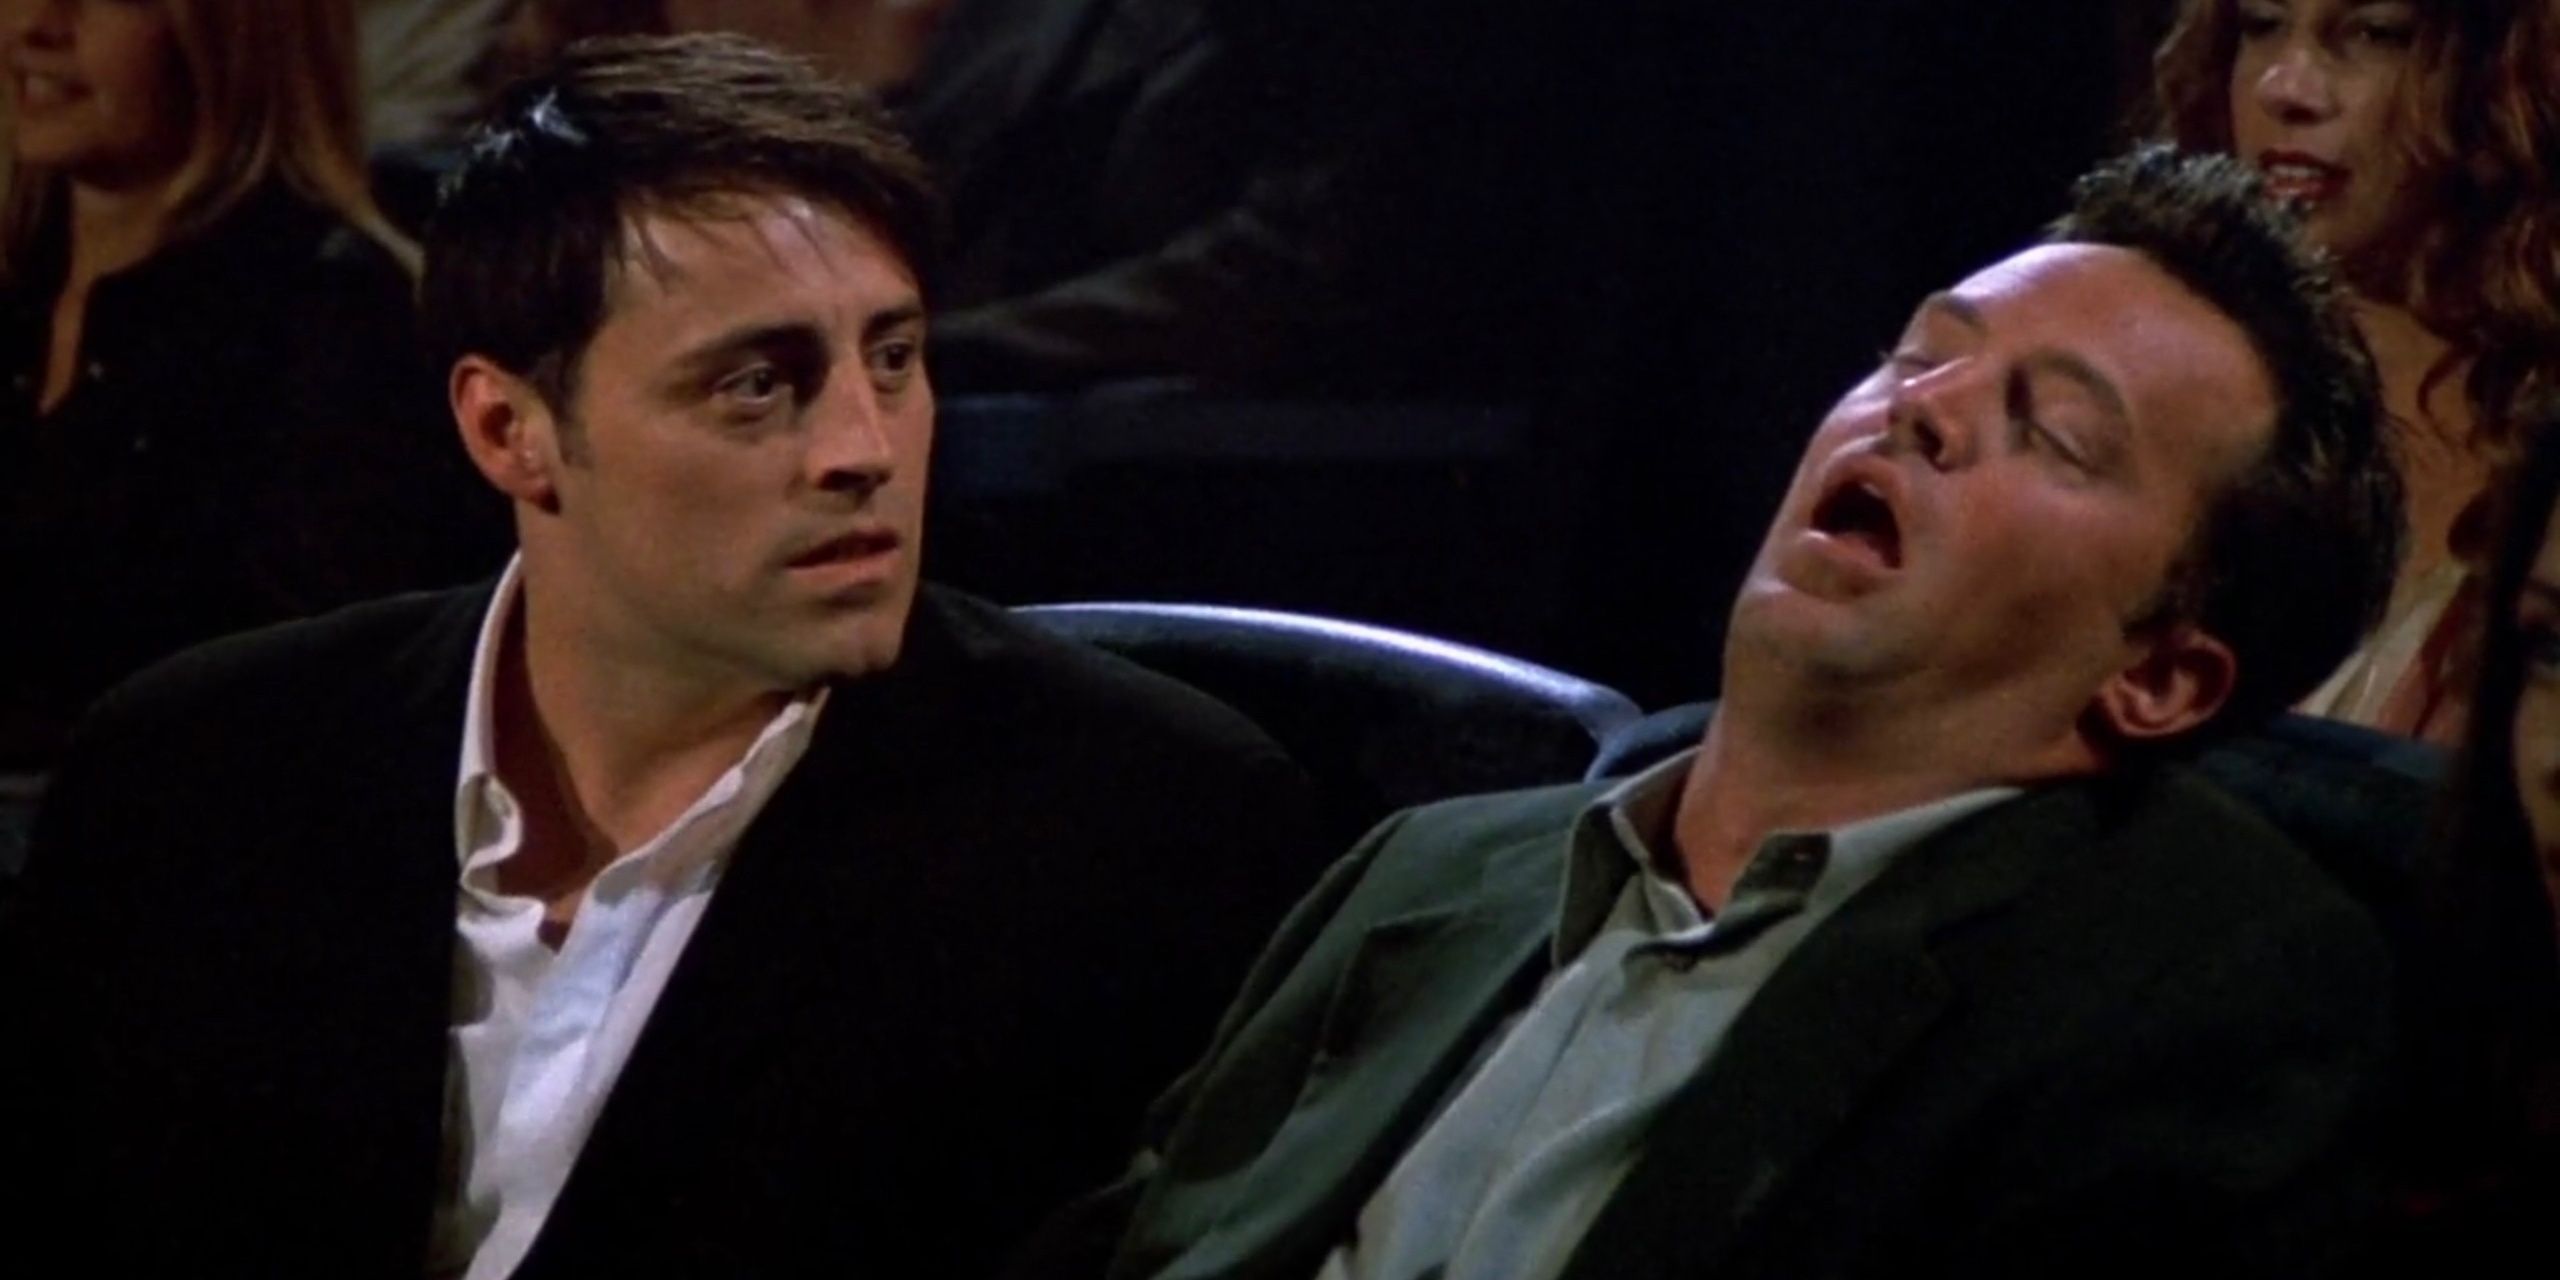 Chandler falls asleep at Joey's movie premiere in friends